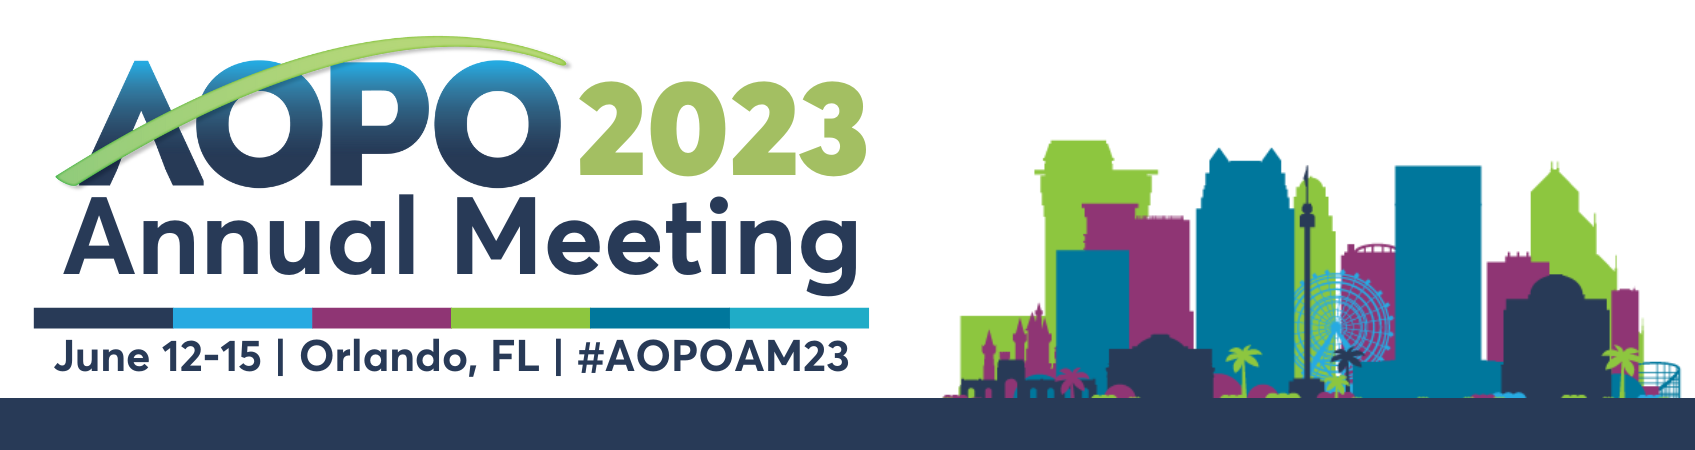 2023 Annual Meeting Web Banner